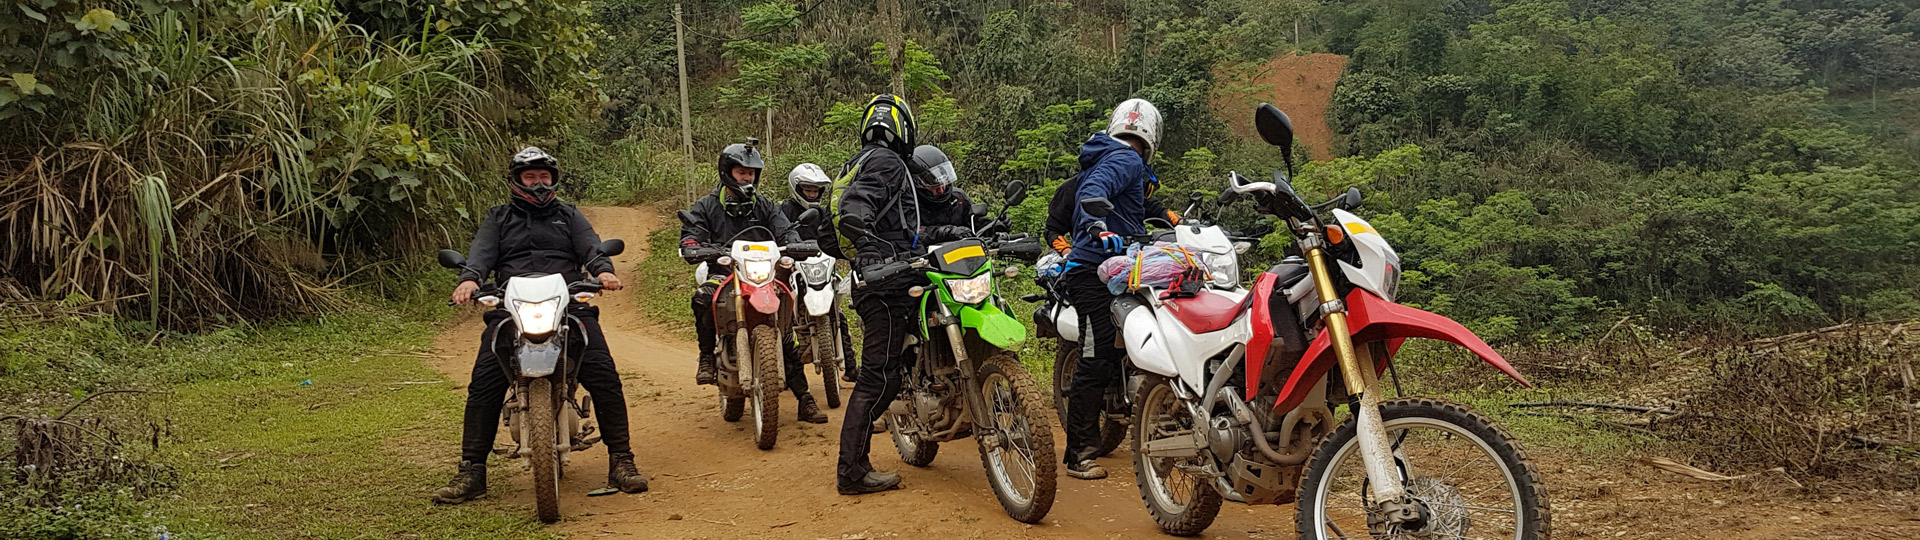 Cambodia Motorcycle Tours 4